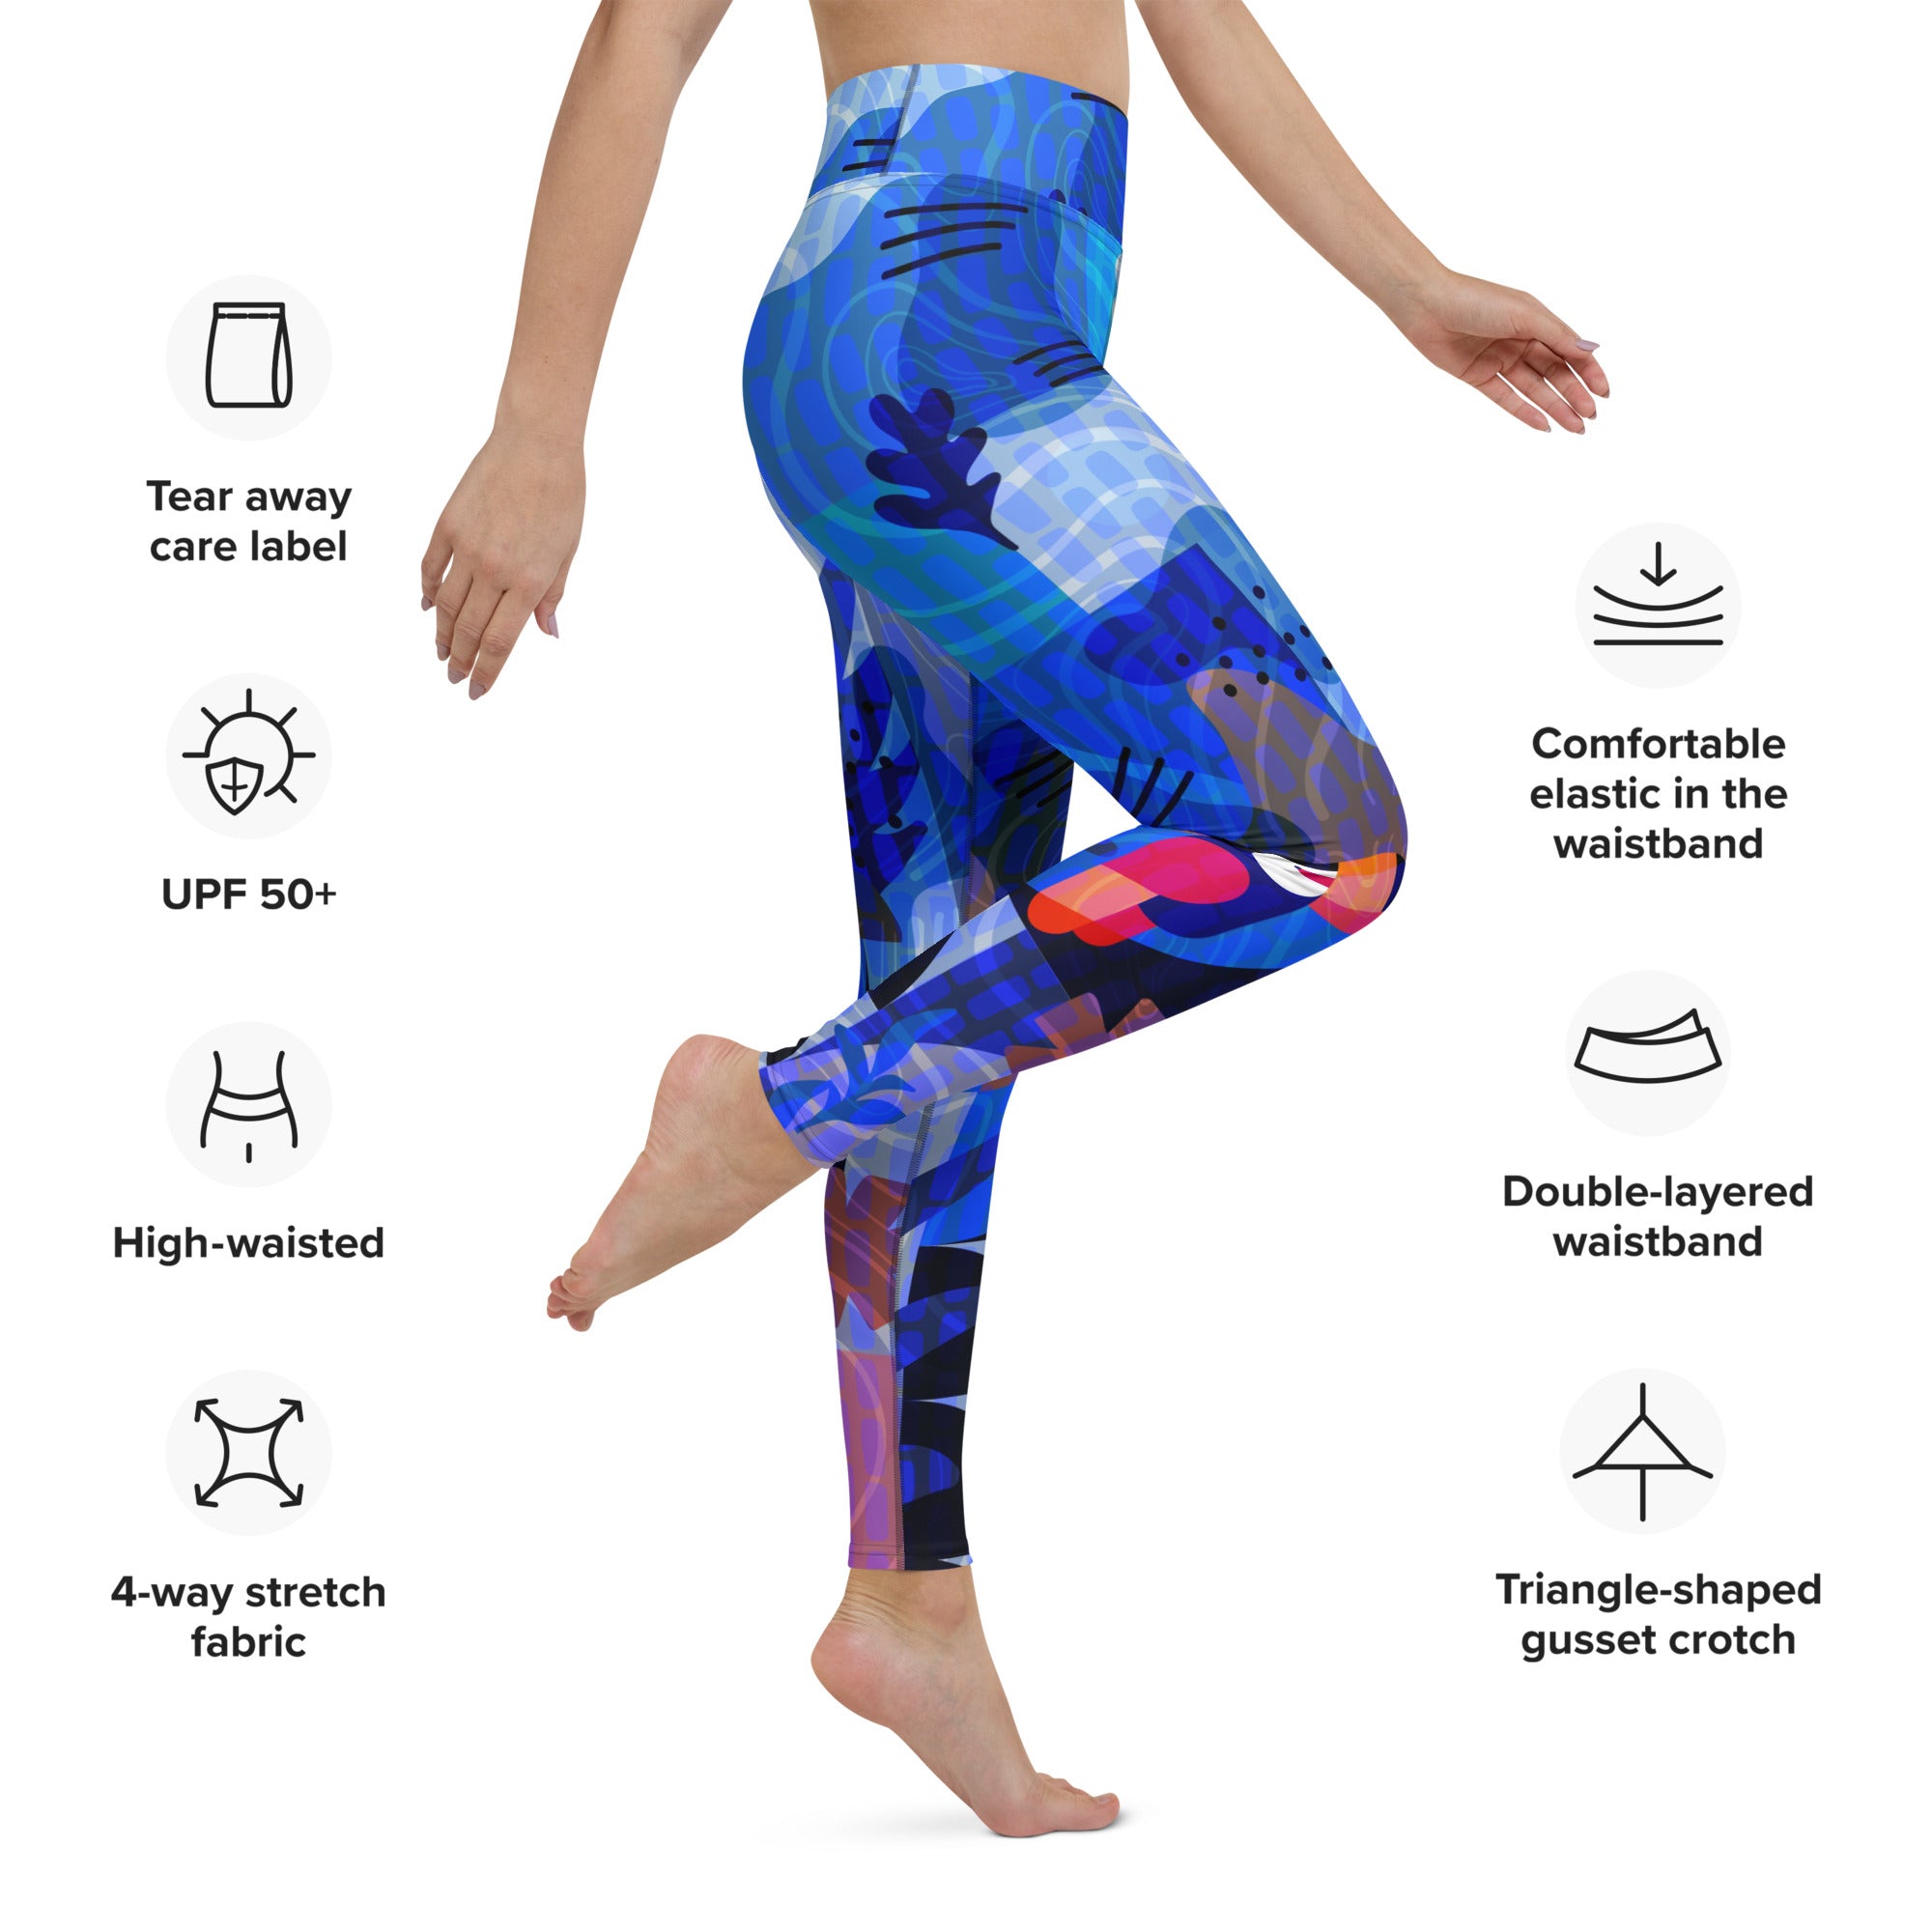 Blue Abstract Yoga Leggings